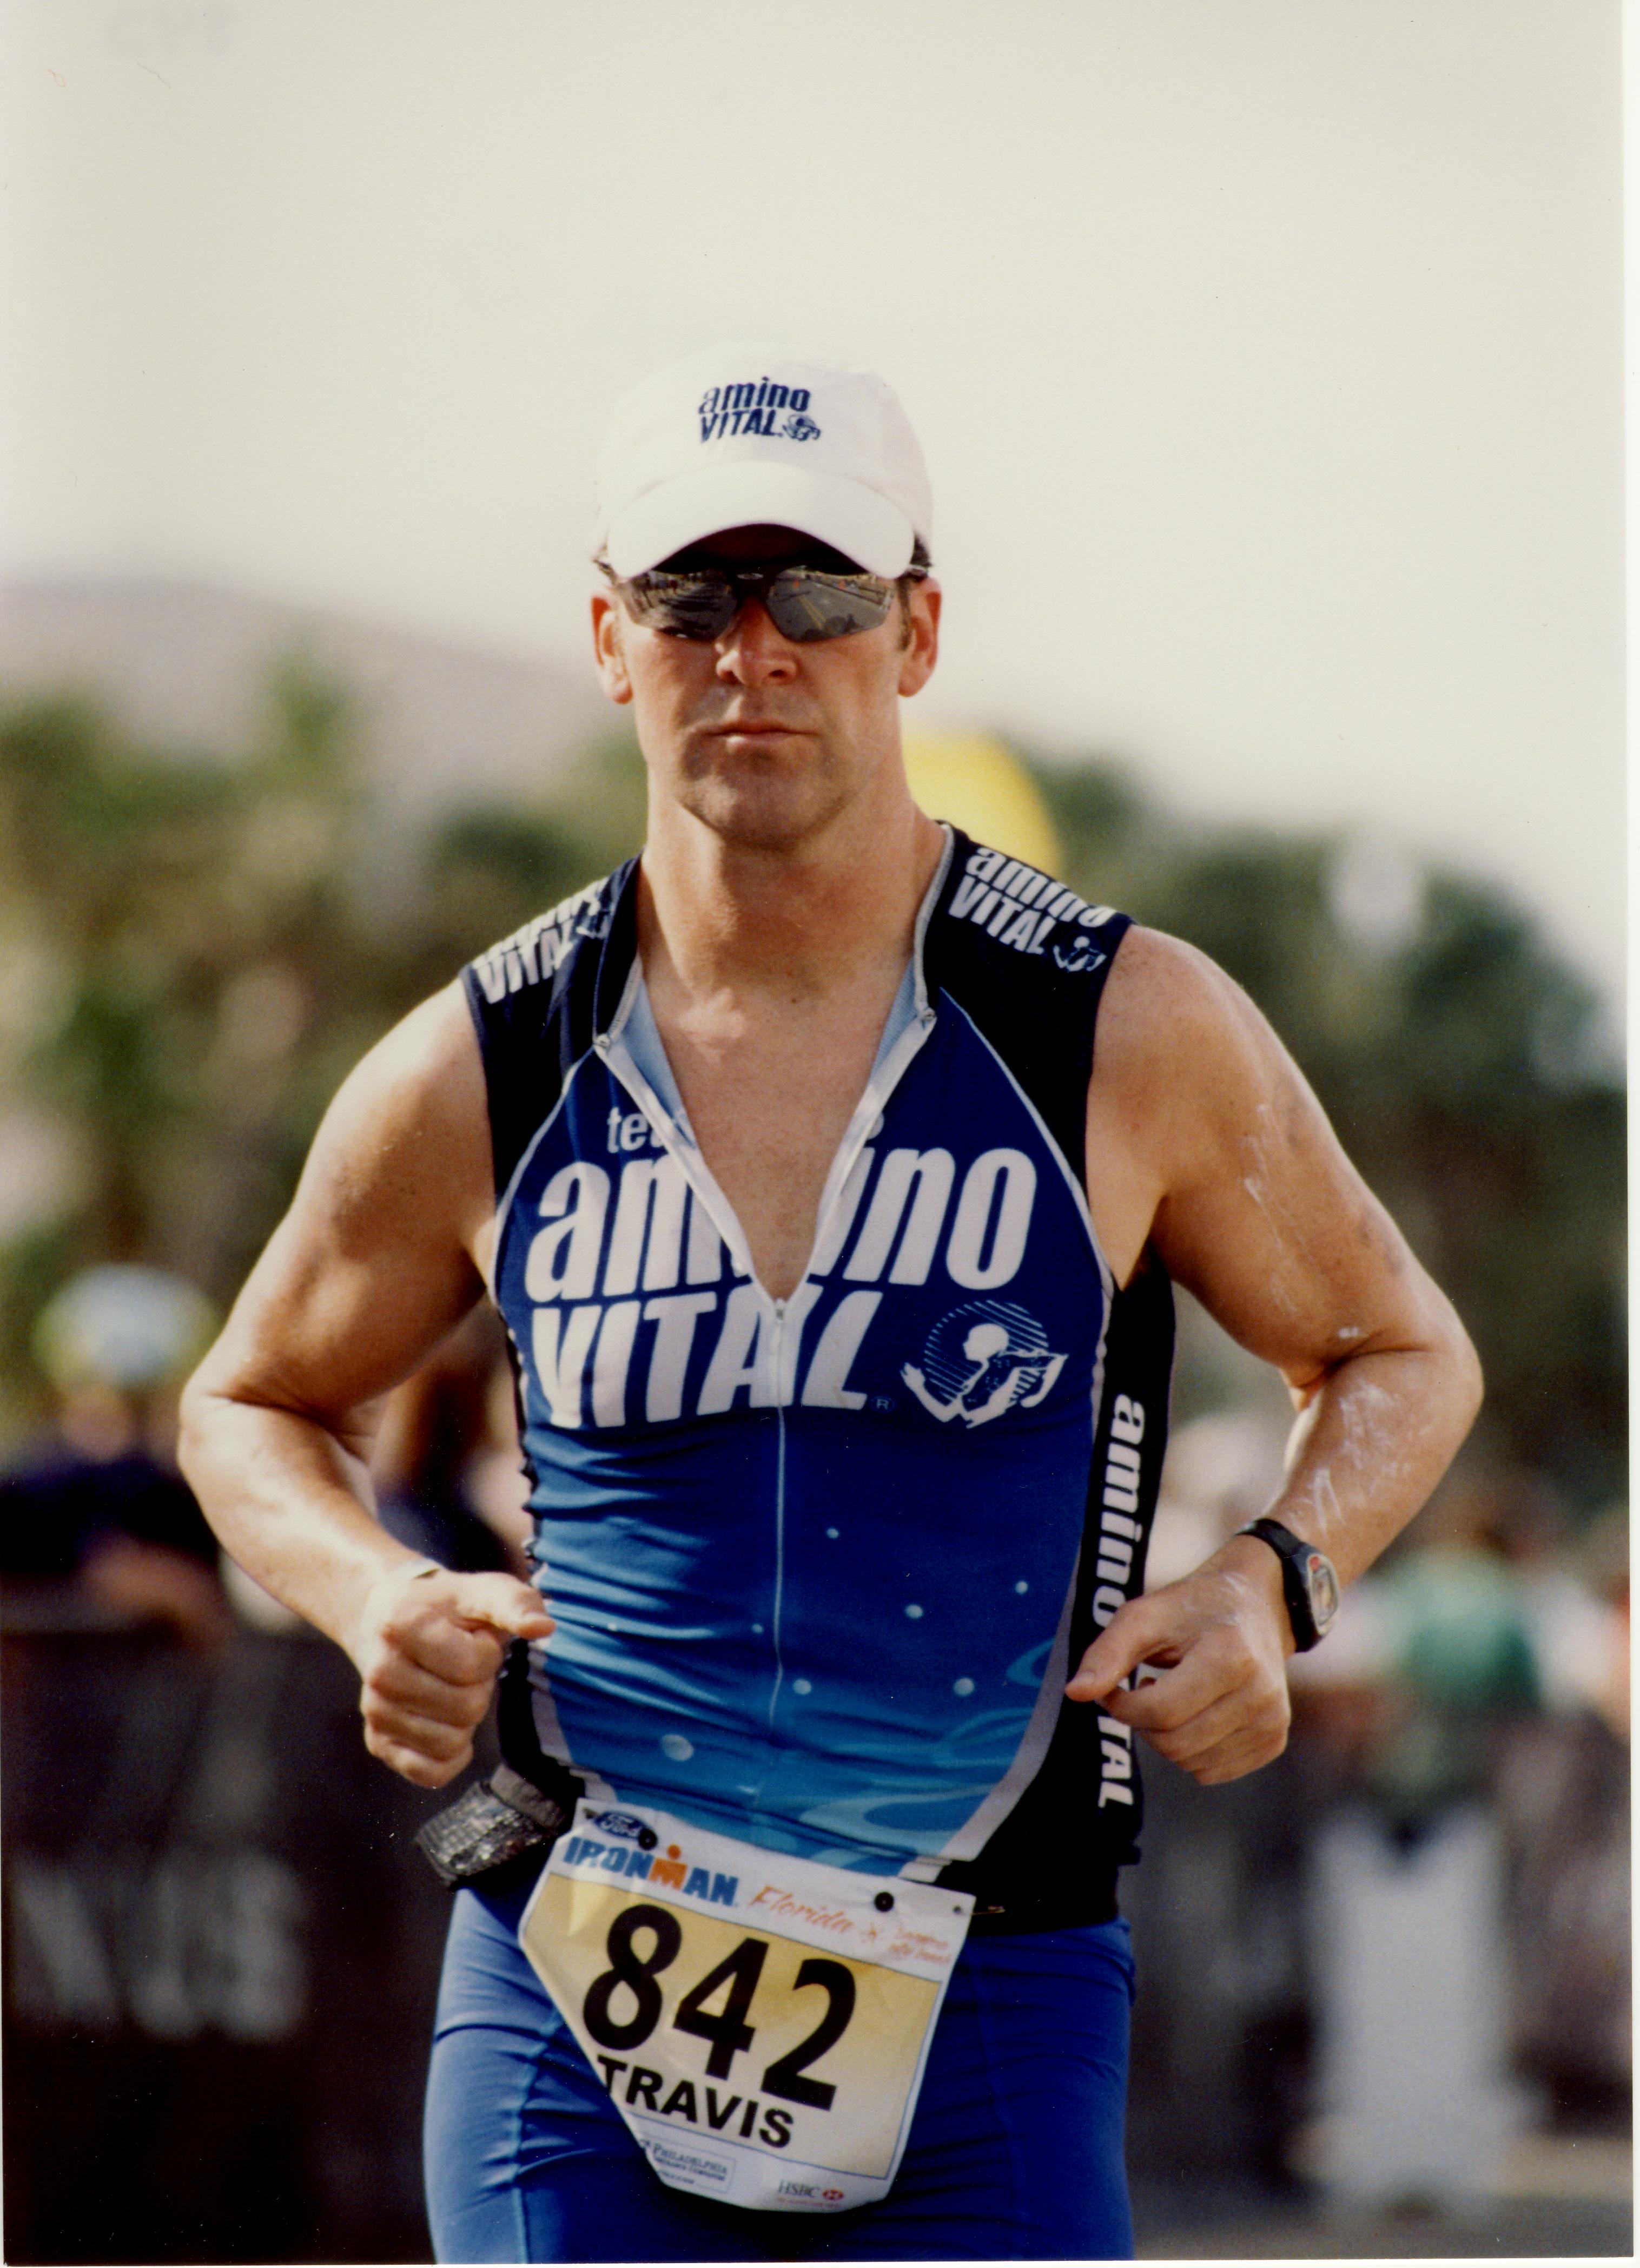 Travis Burrell at Ironman Florida 10:32 - at Mile 116 of 140.6 miles Sponsored by Amino Vital 05-07'